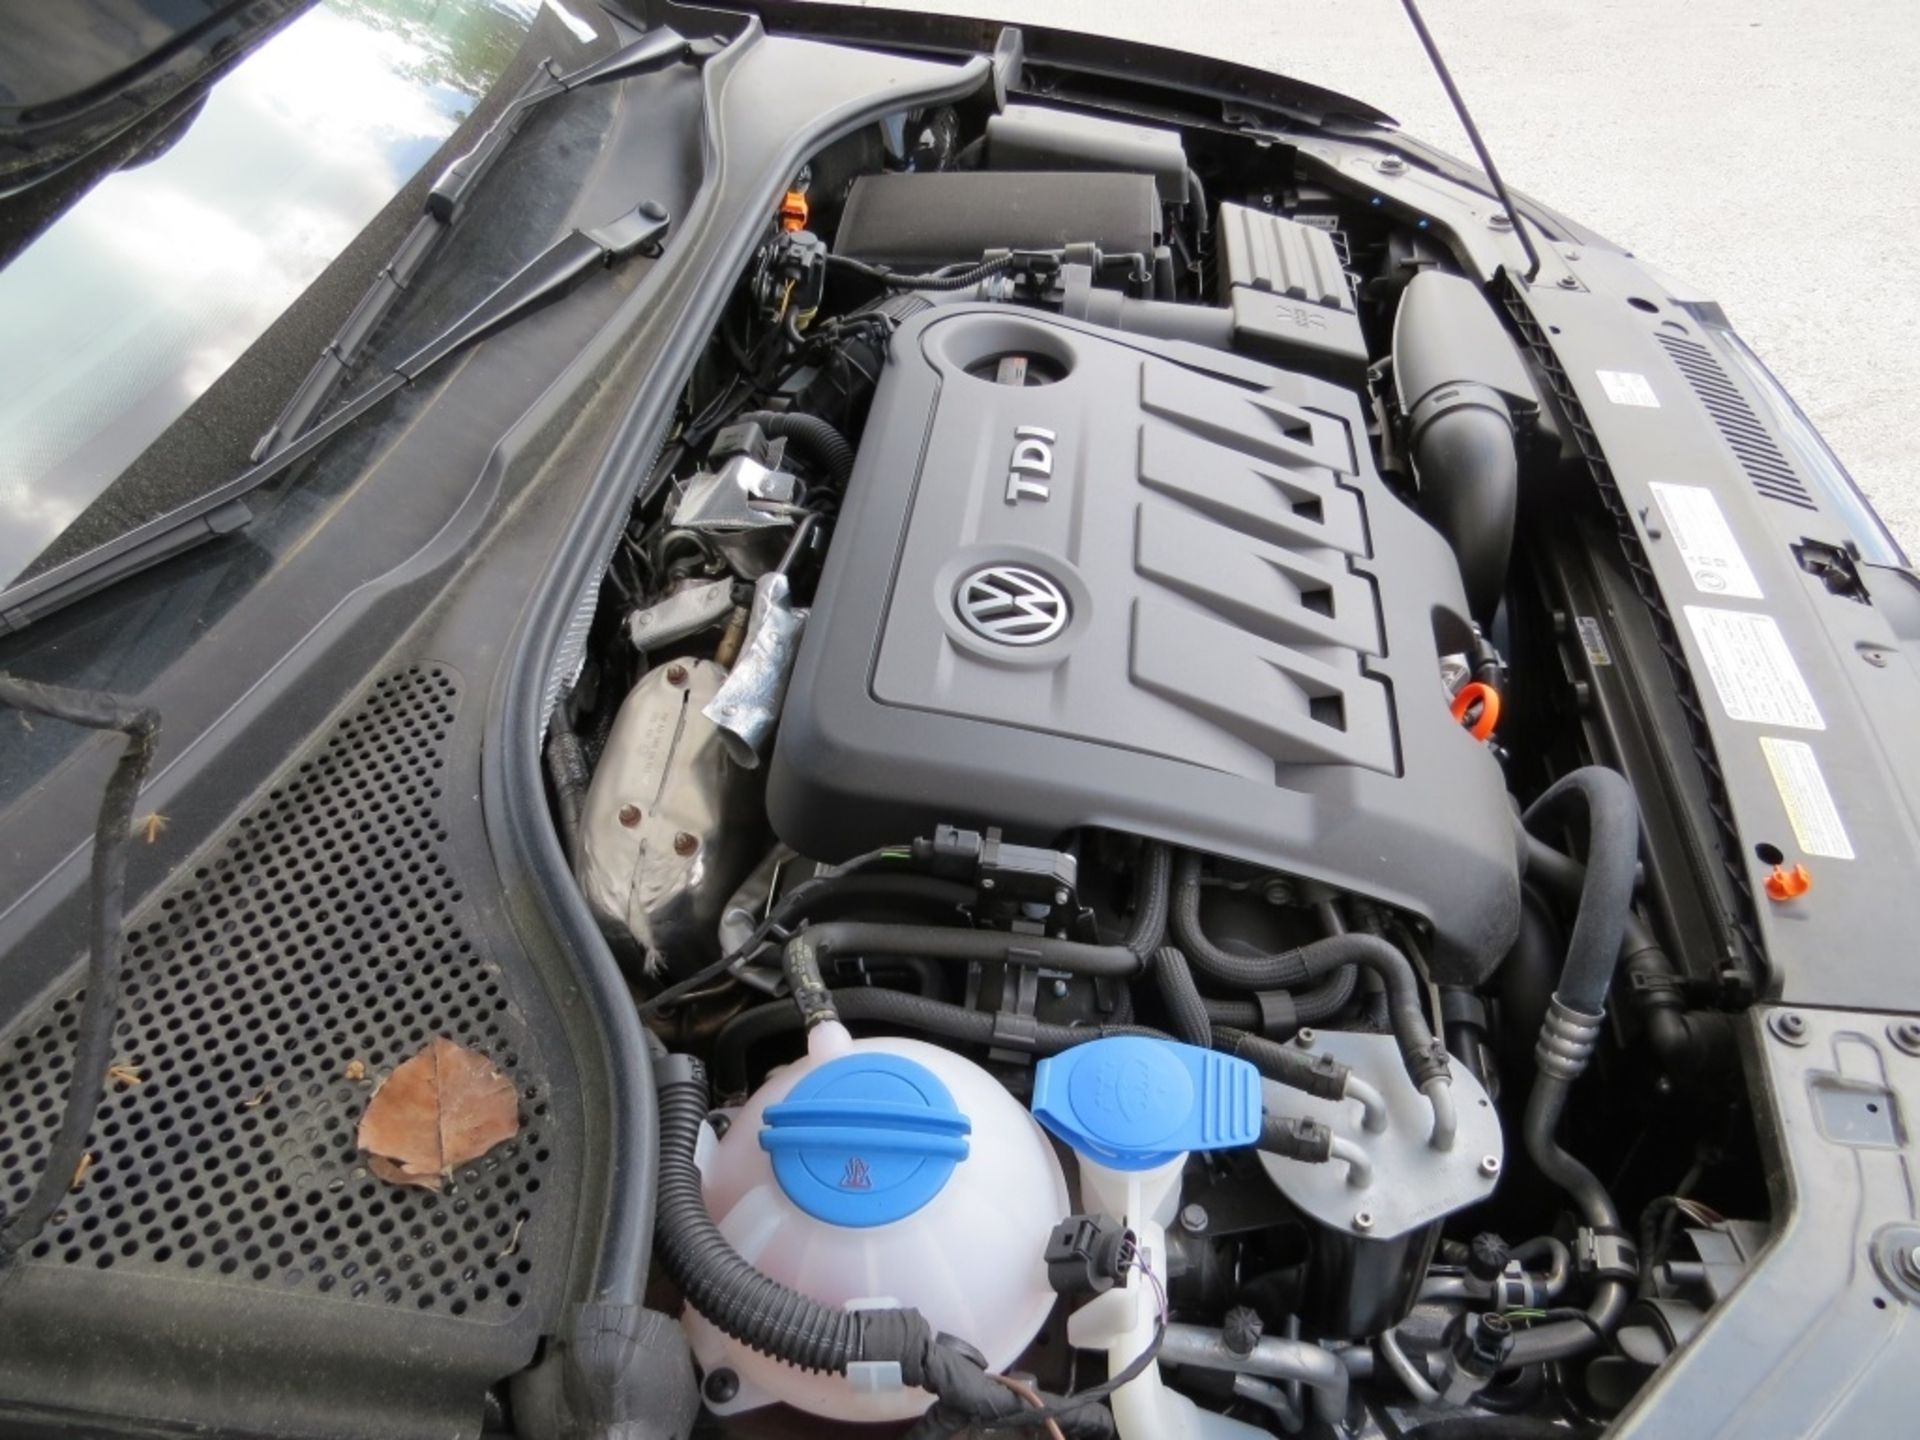 2012 VW Passat TDI Diesel - VIN-1VWBN7A3XCC096912 - Image 21 of 36